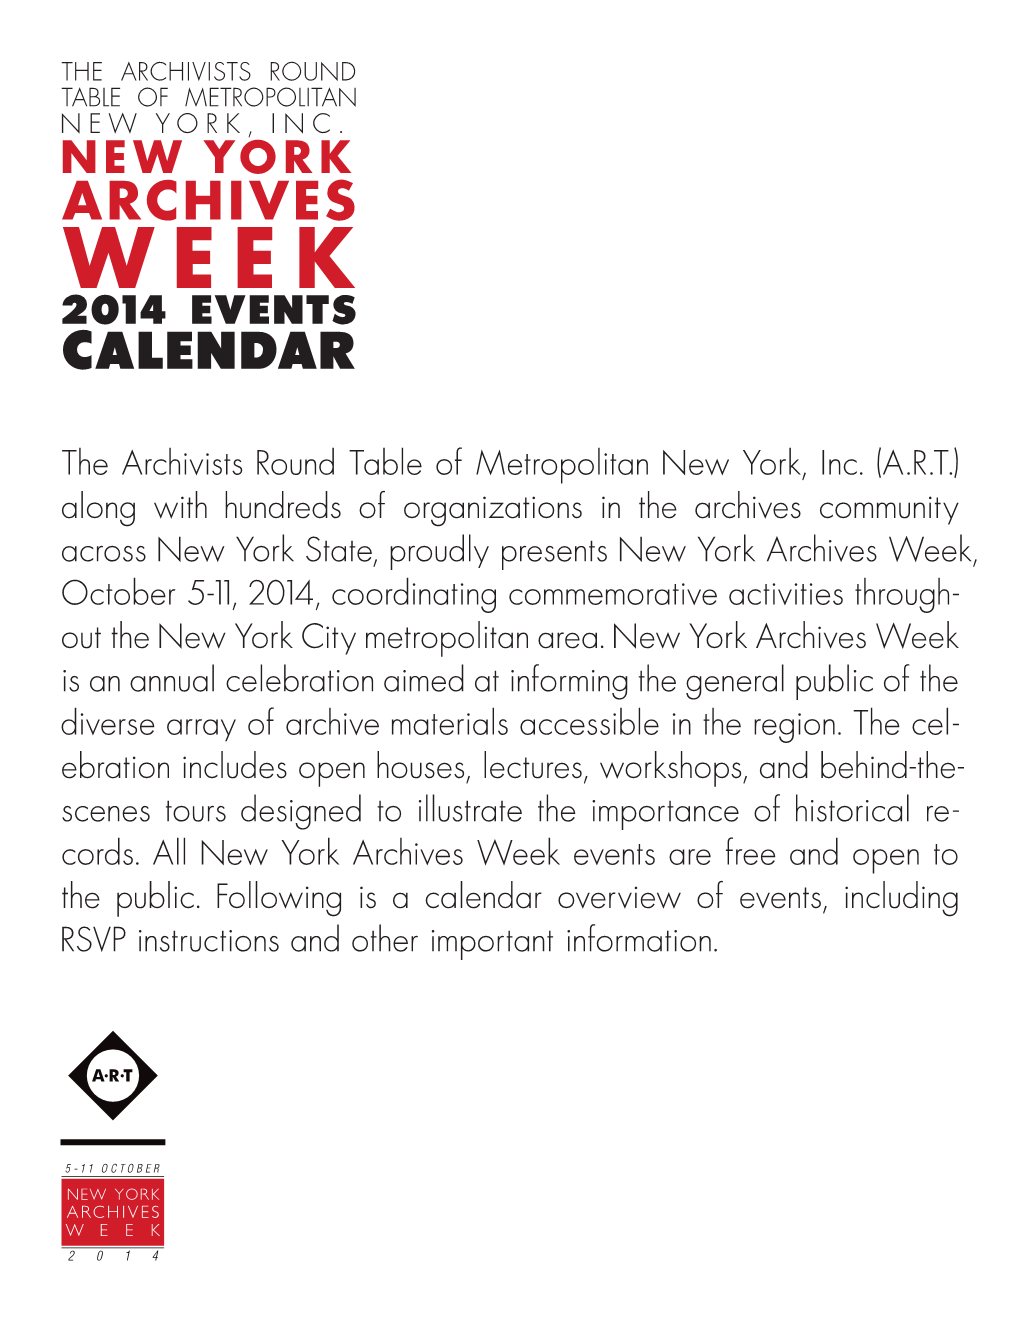 Archives Week 2014 Events Calendar